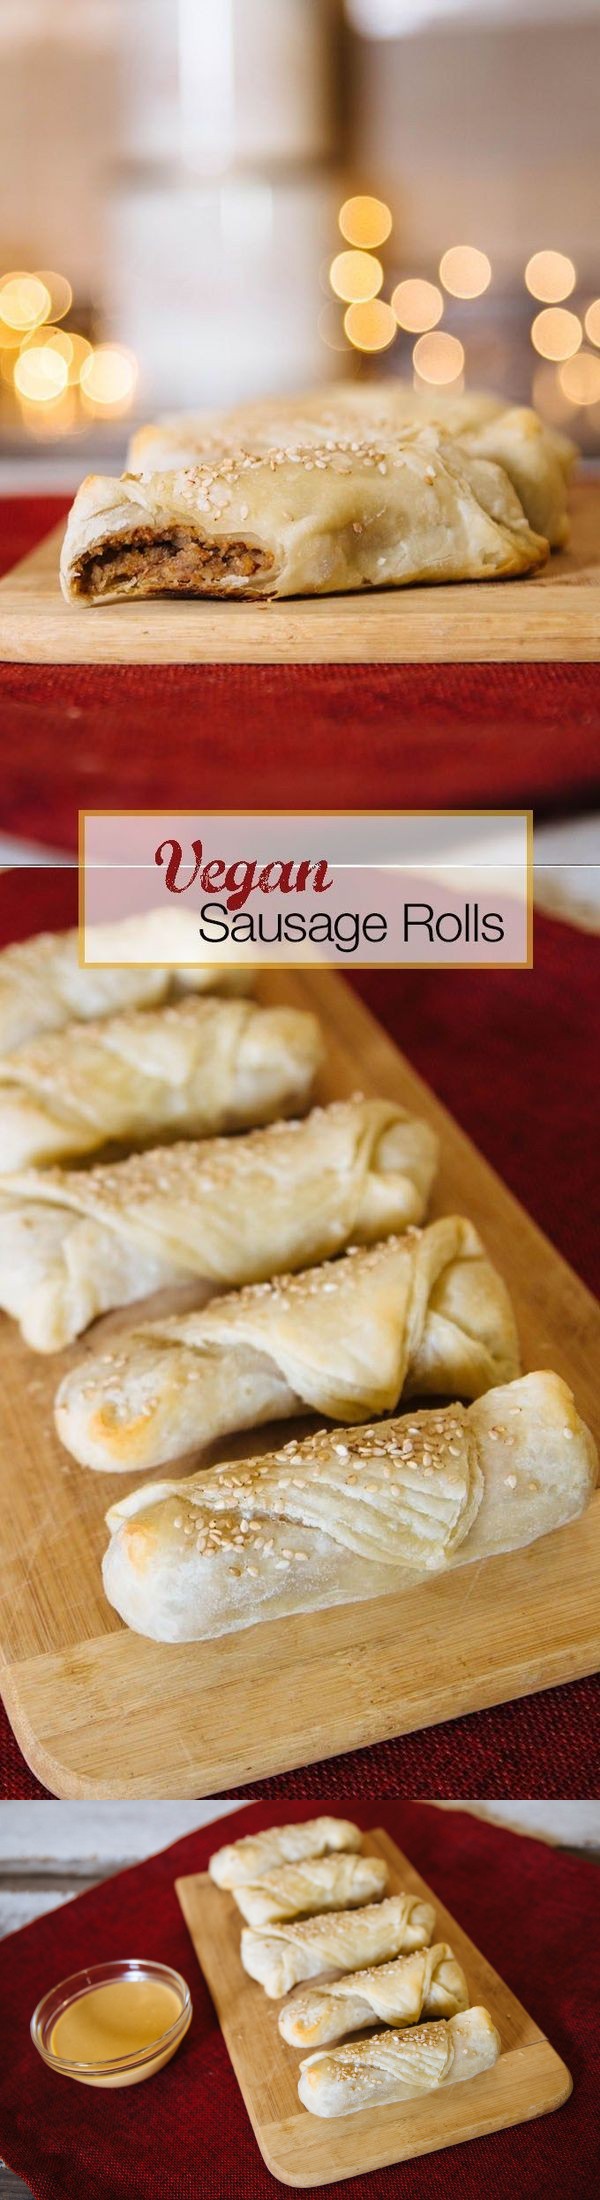 Vegan Sausage Rolls